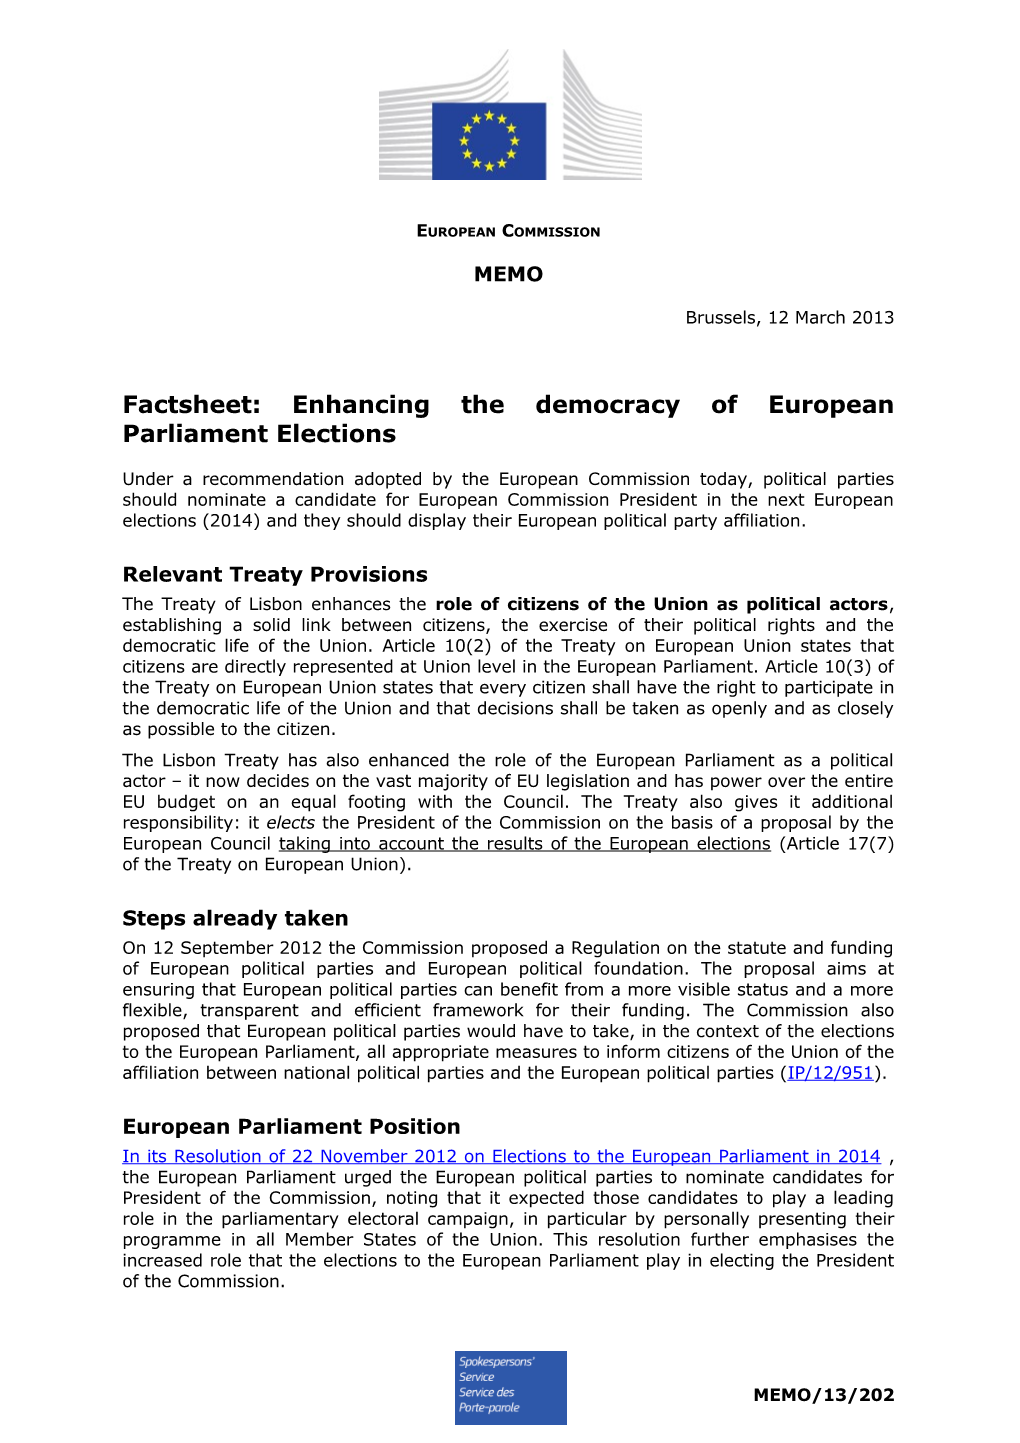 Factsheet: Enhancing the Democracy of European Parliament Elections